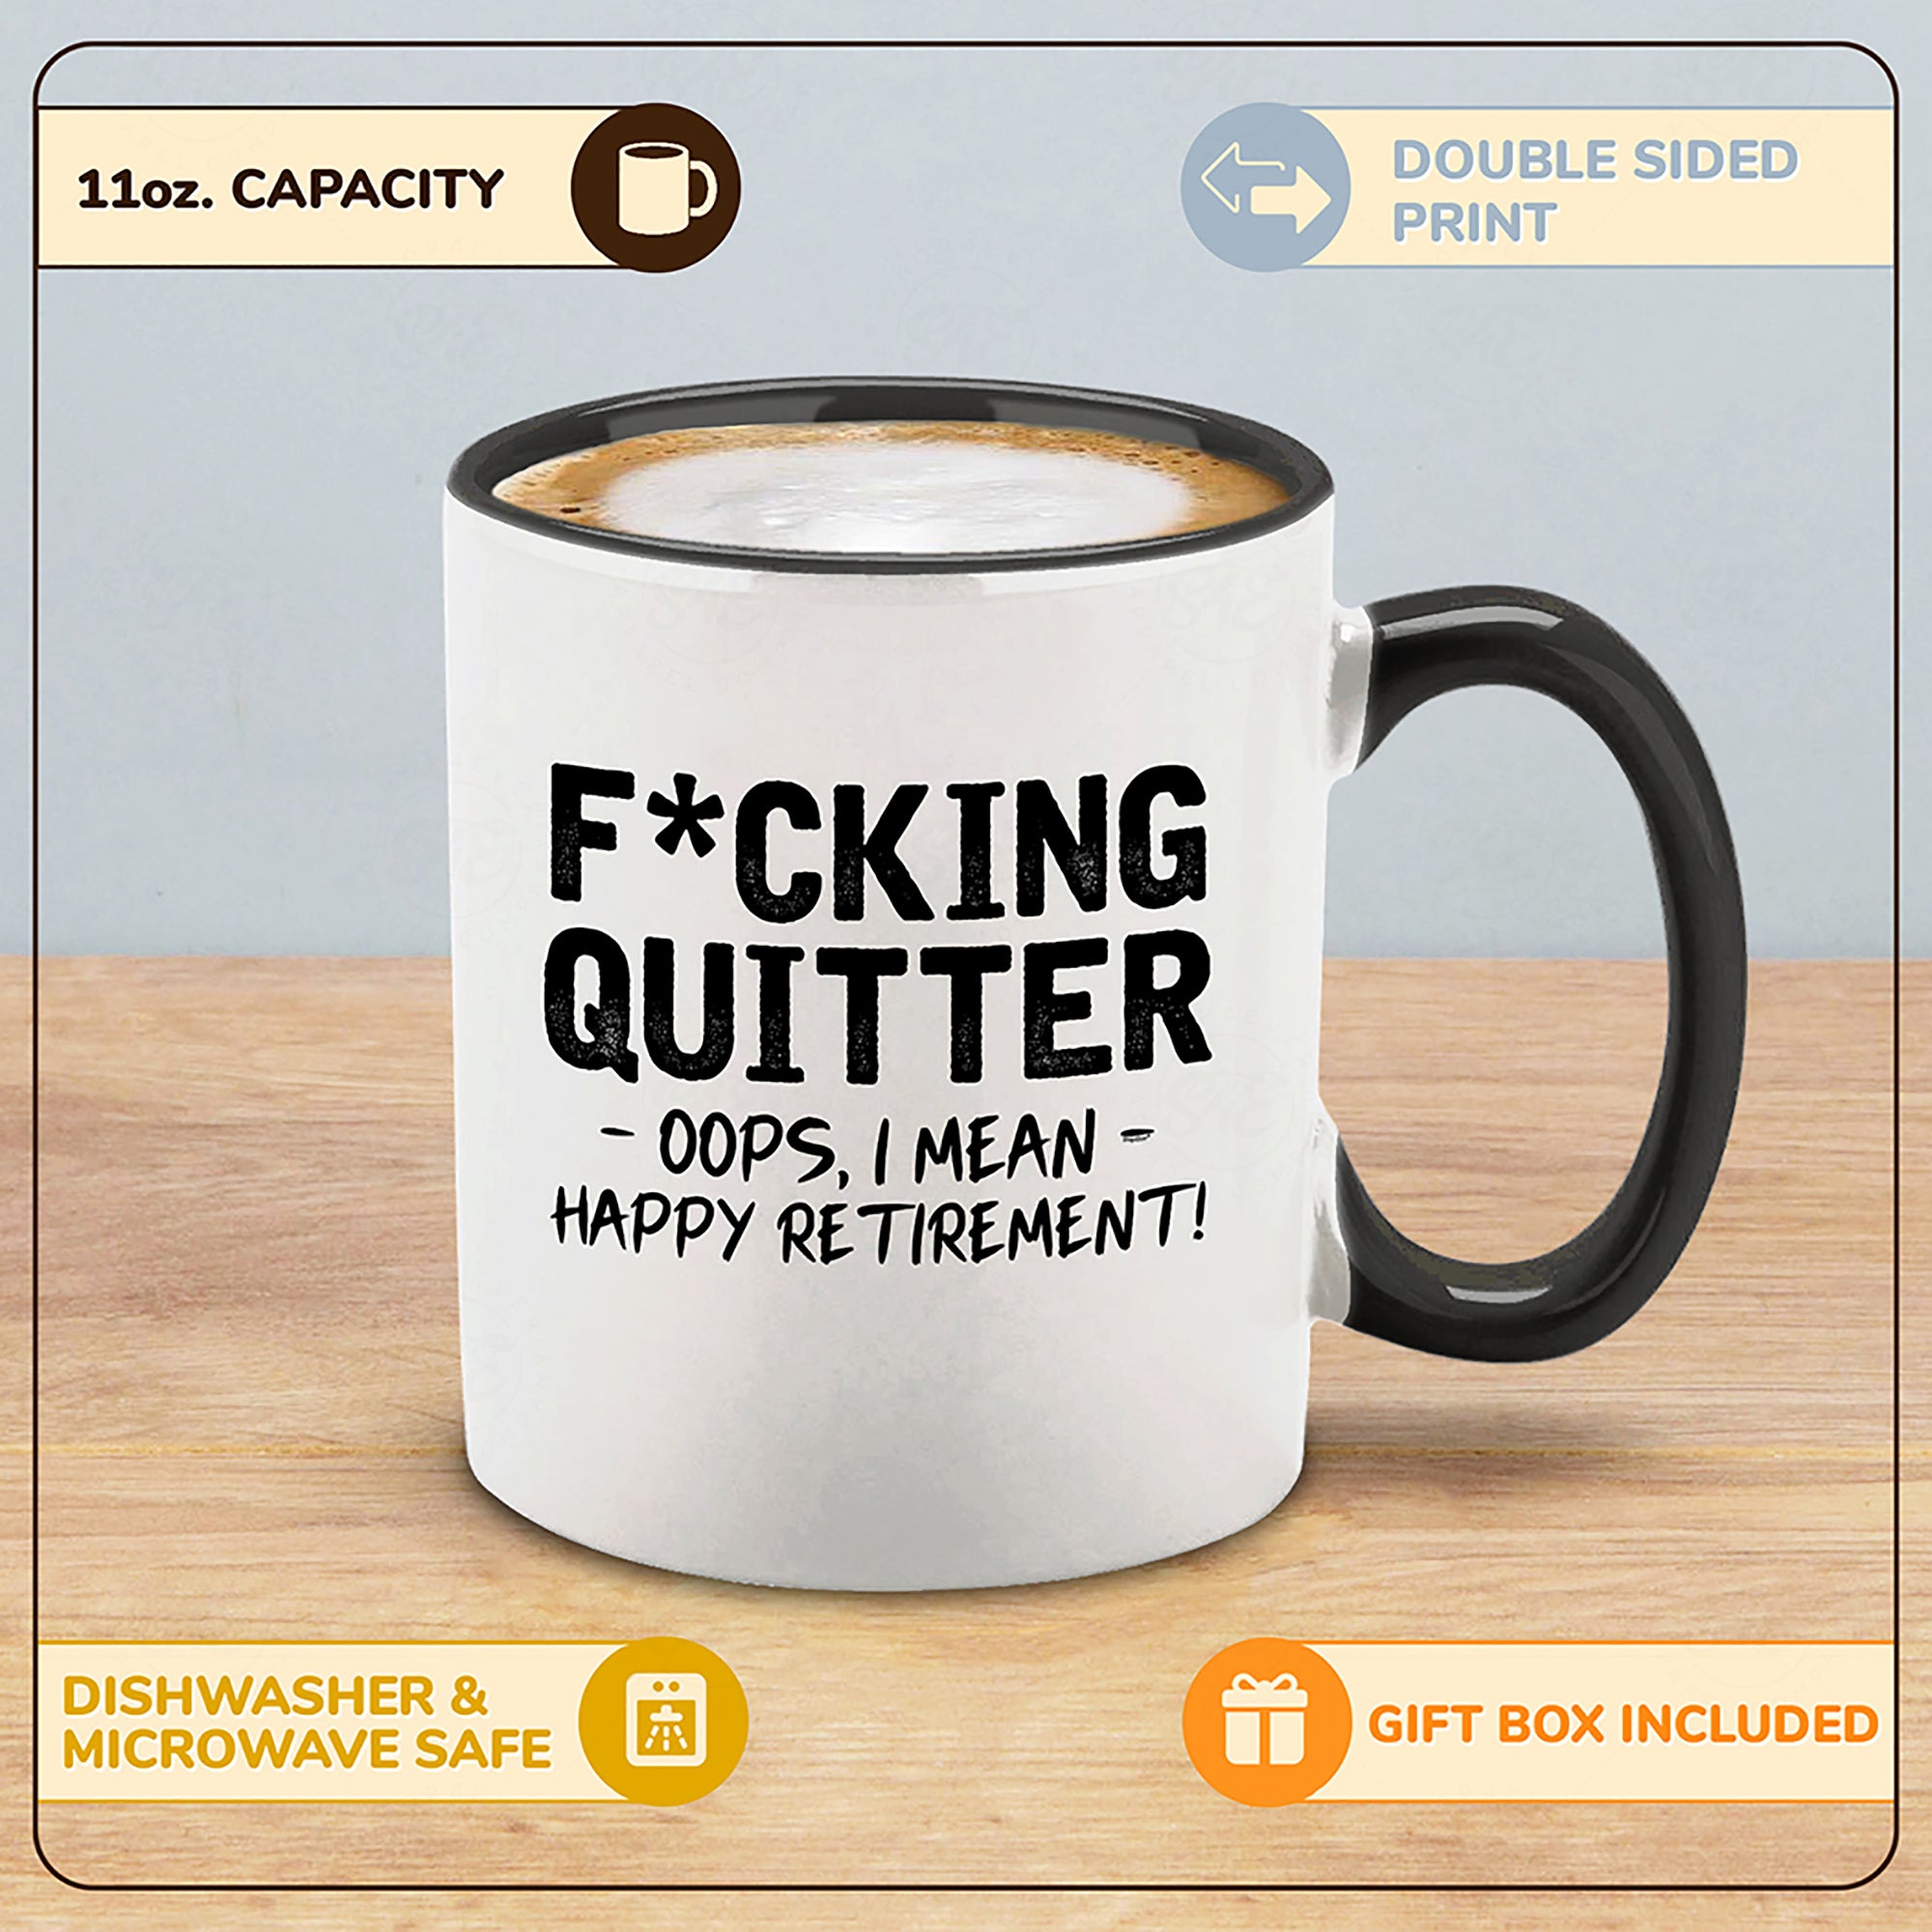 Quitter Oops, I Mean Happy Retirement! Black Handle Ceramic Coffee Mug